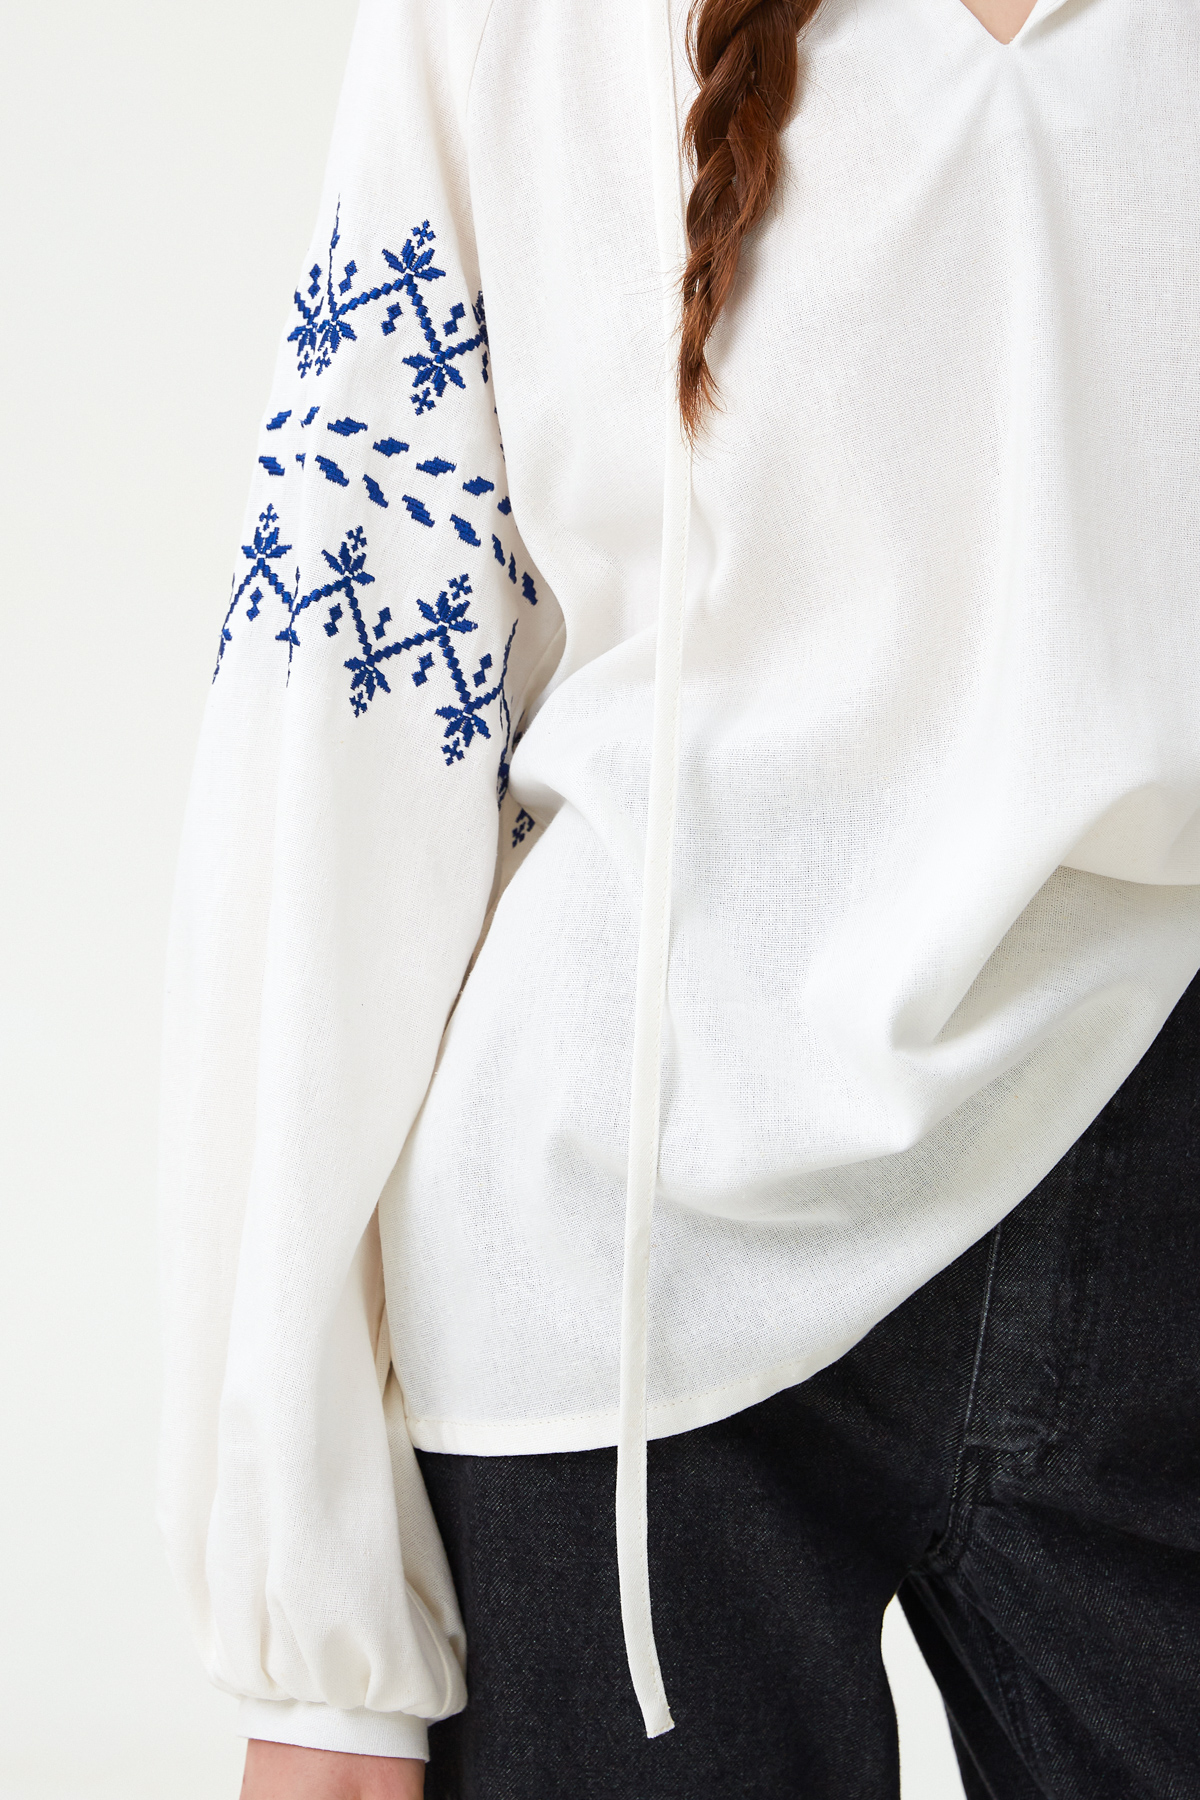 Milky linen vyshyvanka shirt with zigzags embroidery, photo 4